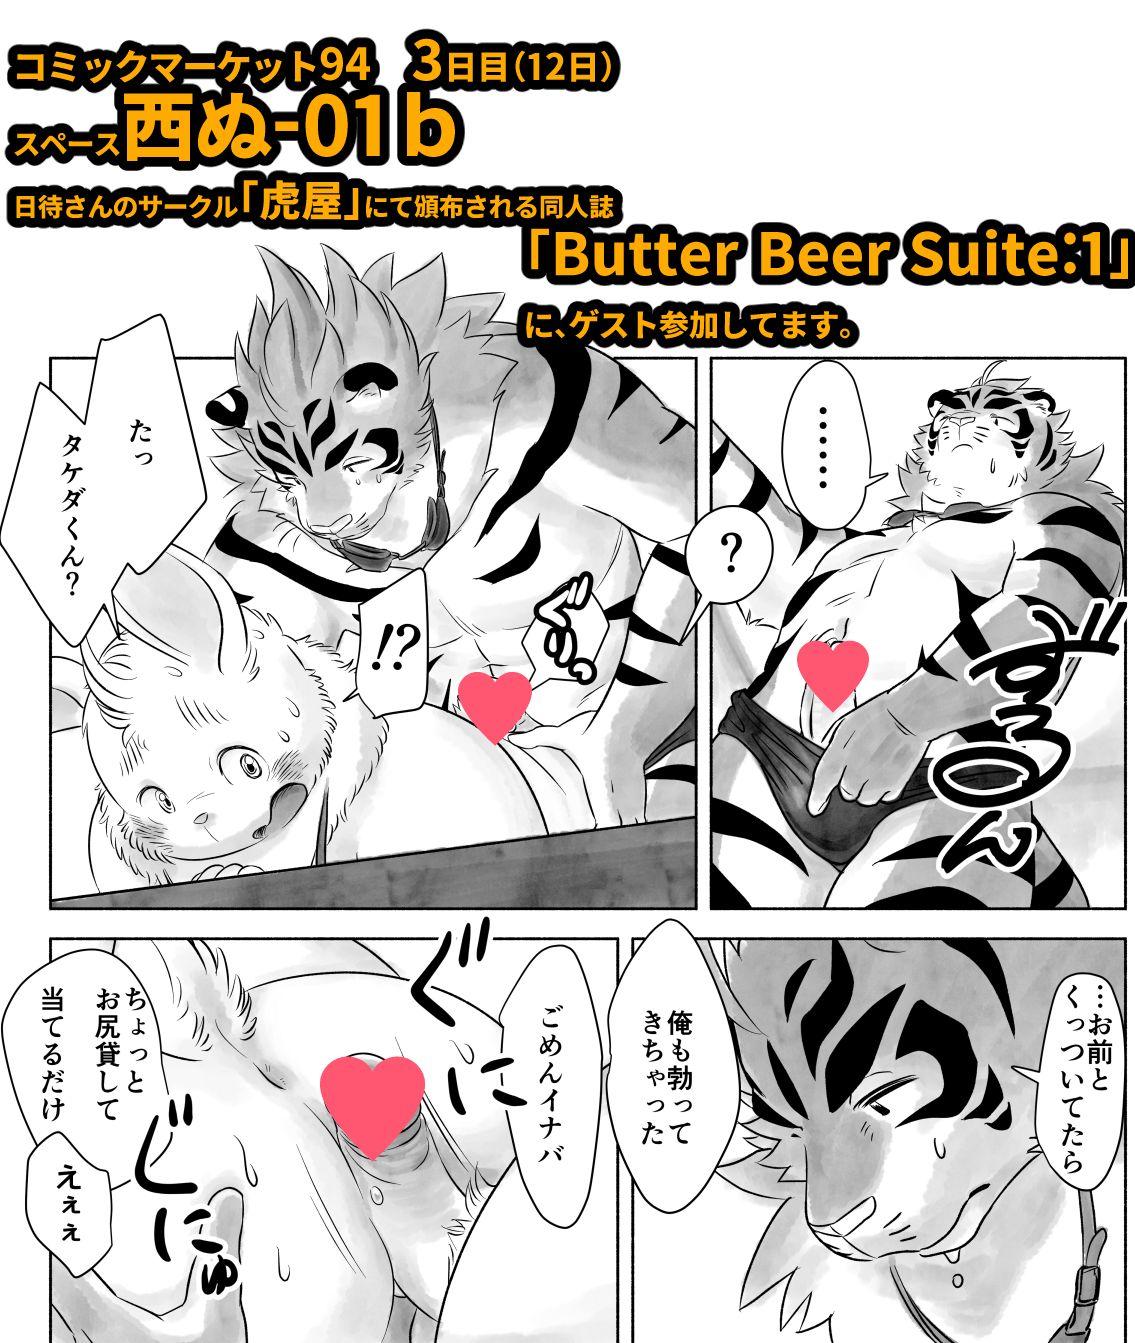 Koda_kota - Bunny and Tiger + extras 1